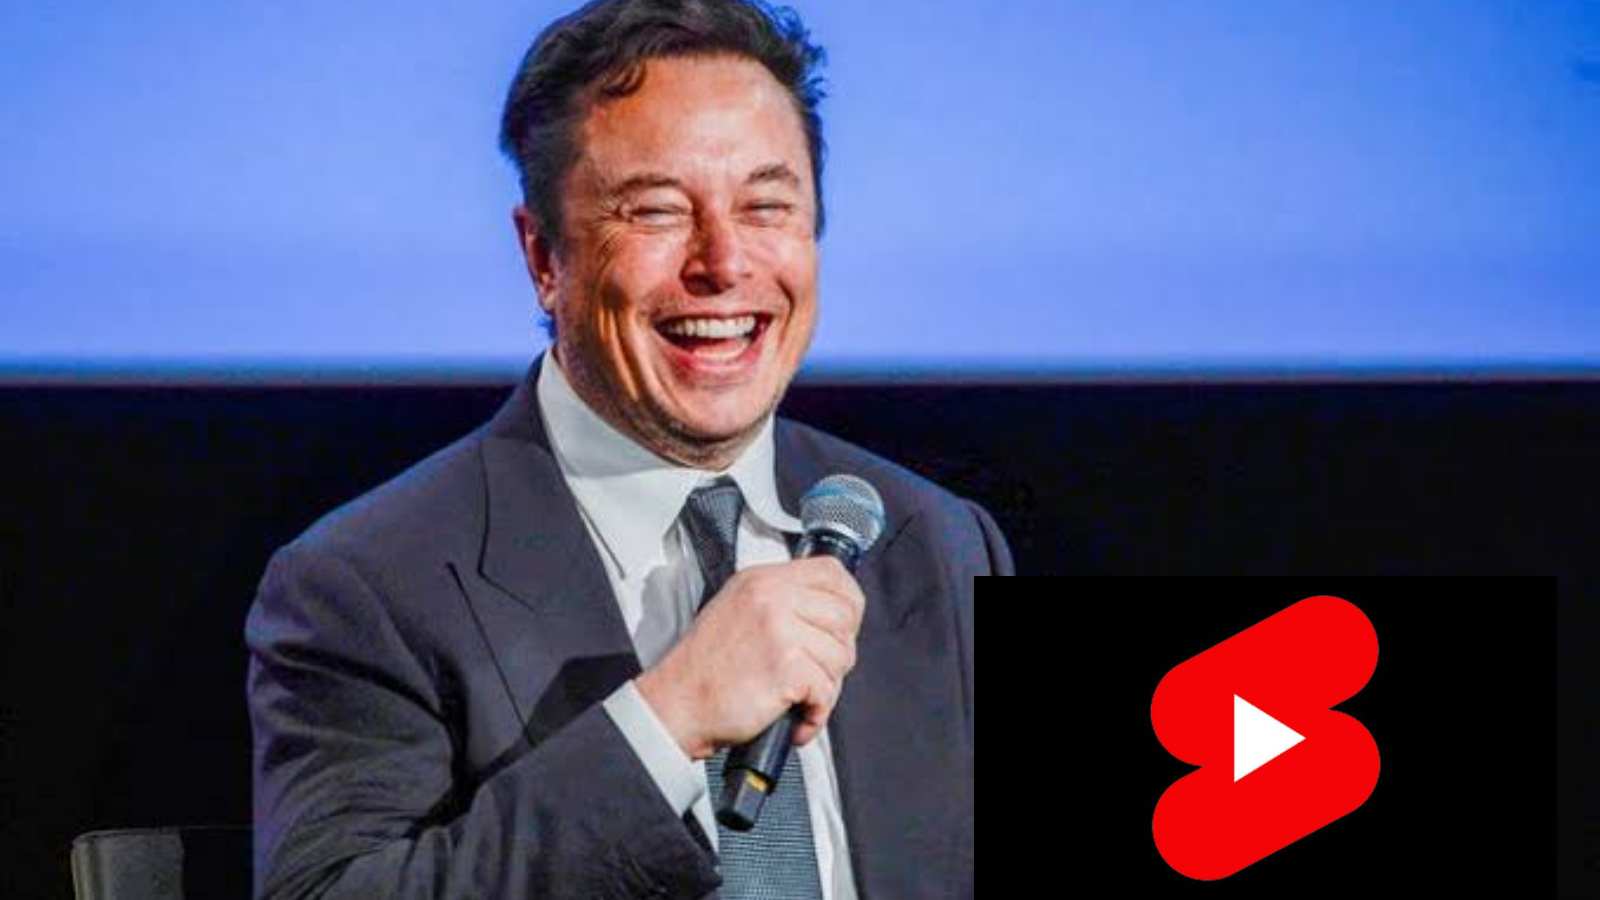 Elon Musk on introducing short format videos on Twitter